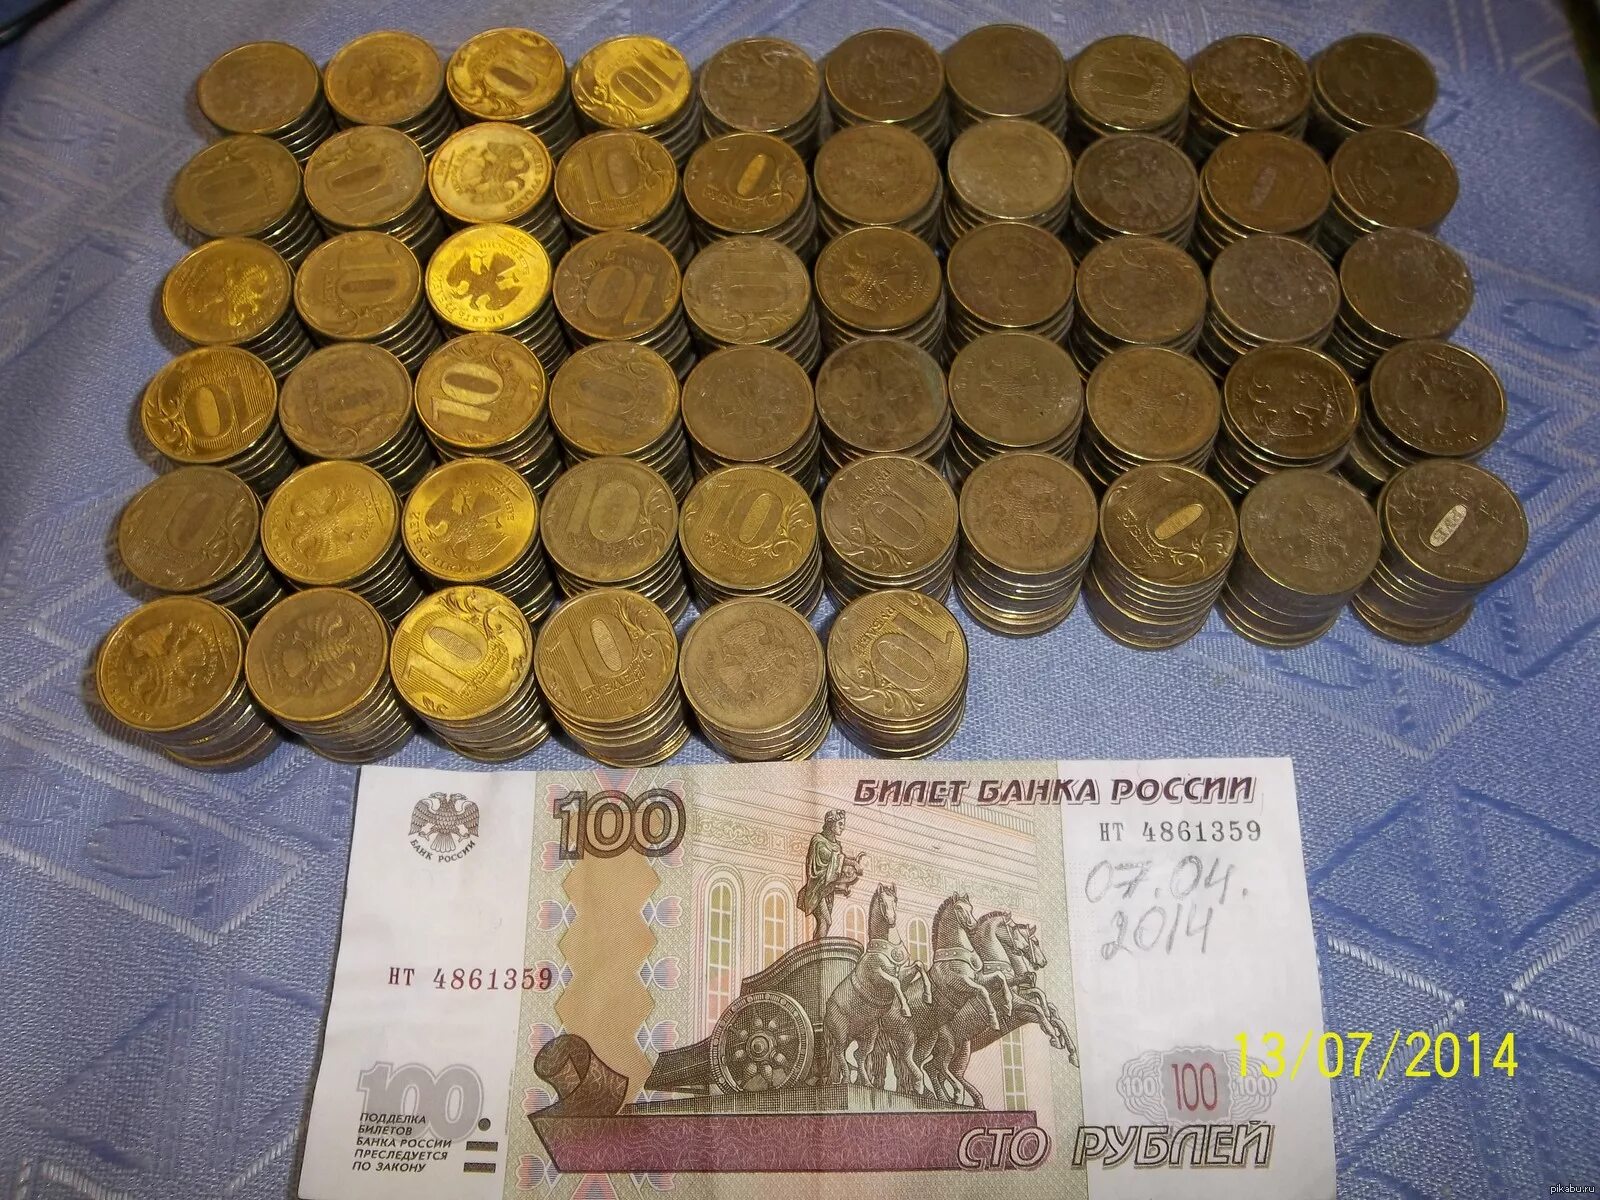 5 тысяч копеек. 1000 Монет по 5 рублей. 1000 Монет по 10 рублей. 1000 Рублей 10 рублевыми монетами. 100 000 По 10 рублей монетами.